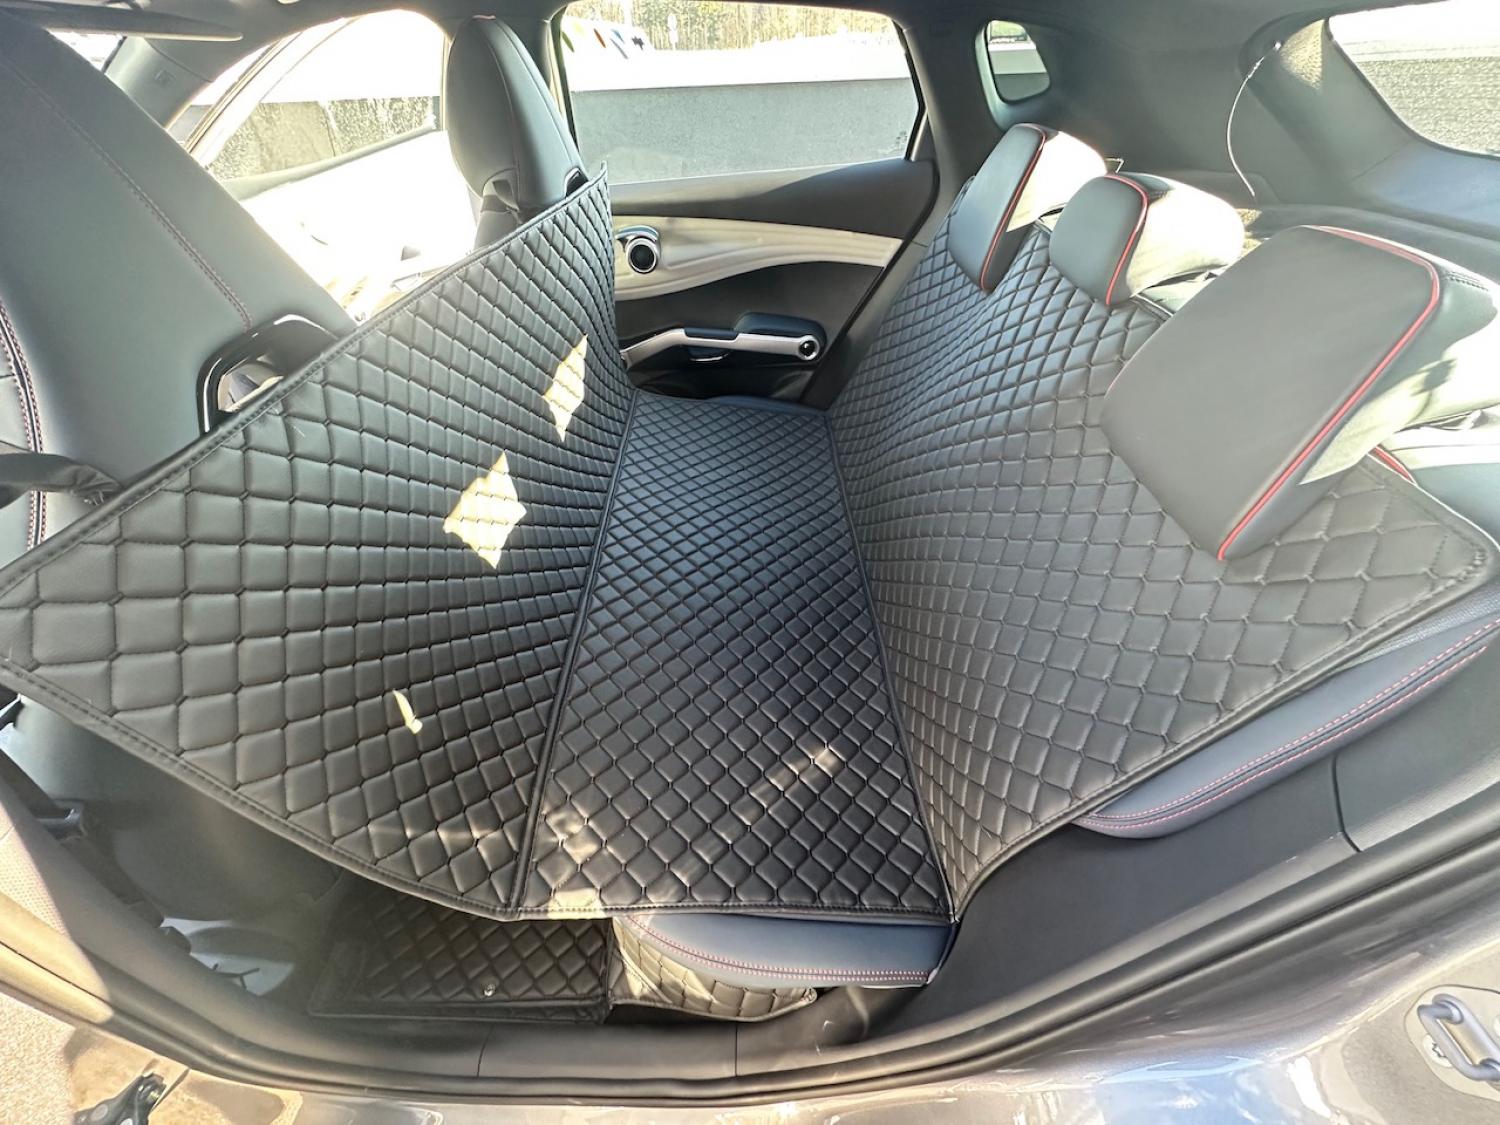 CARSTYLER® Back Seat Cover Geeignet Für Mercedes C Klasse S 206 All Terrain